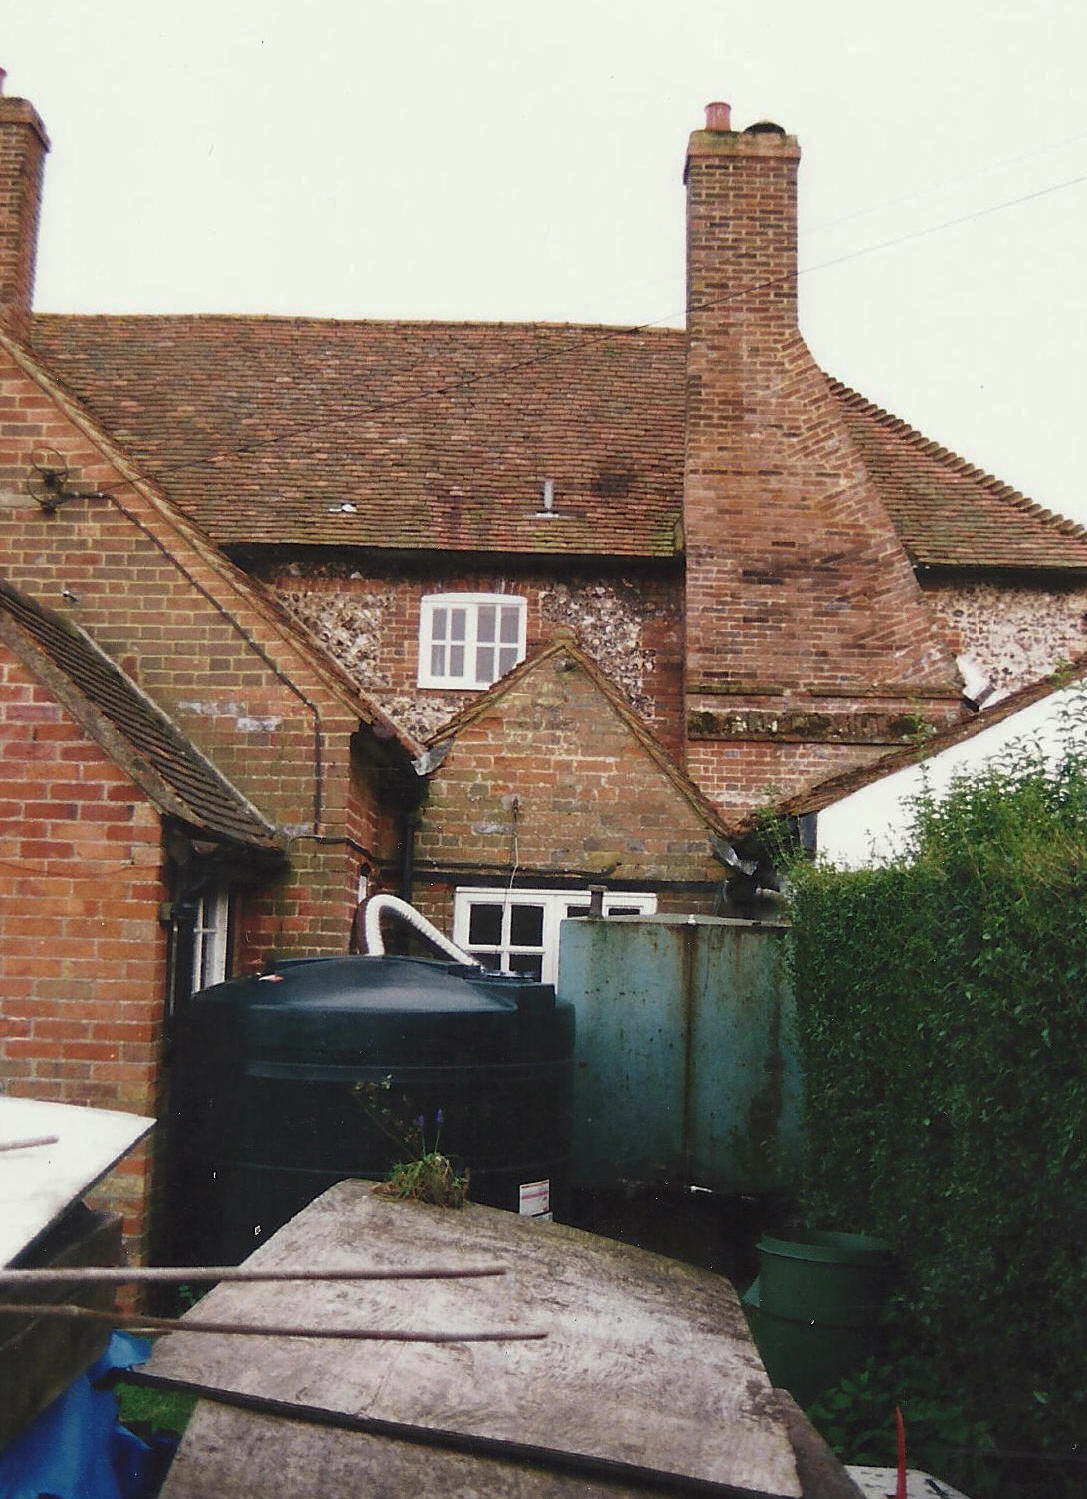 Previous Configuration 2003 - Old Peppard Farmhouse - Oxfordshire Architects - Samuel Kendall Associates